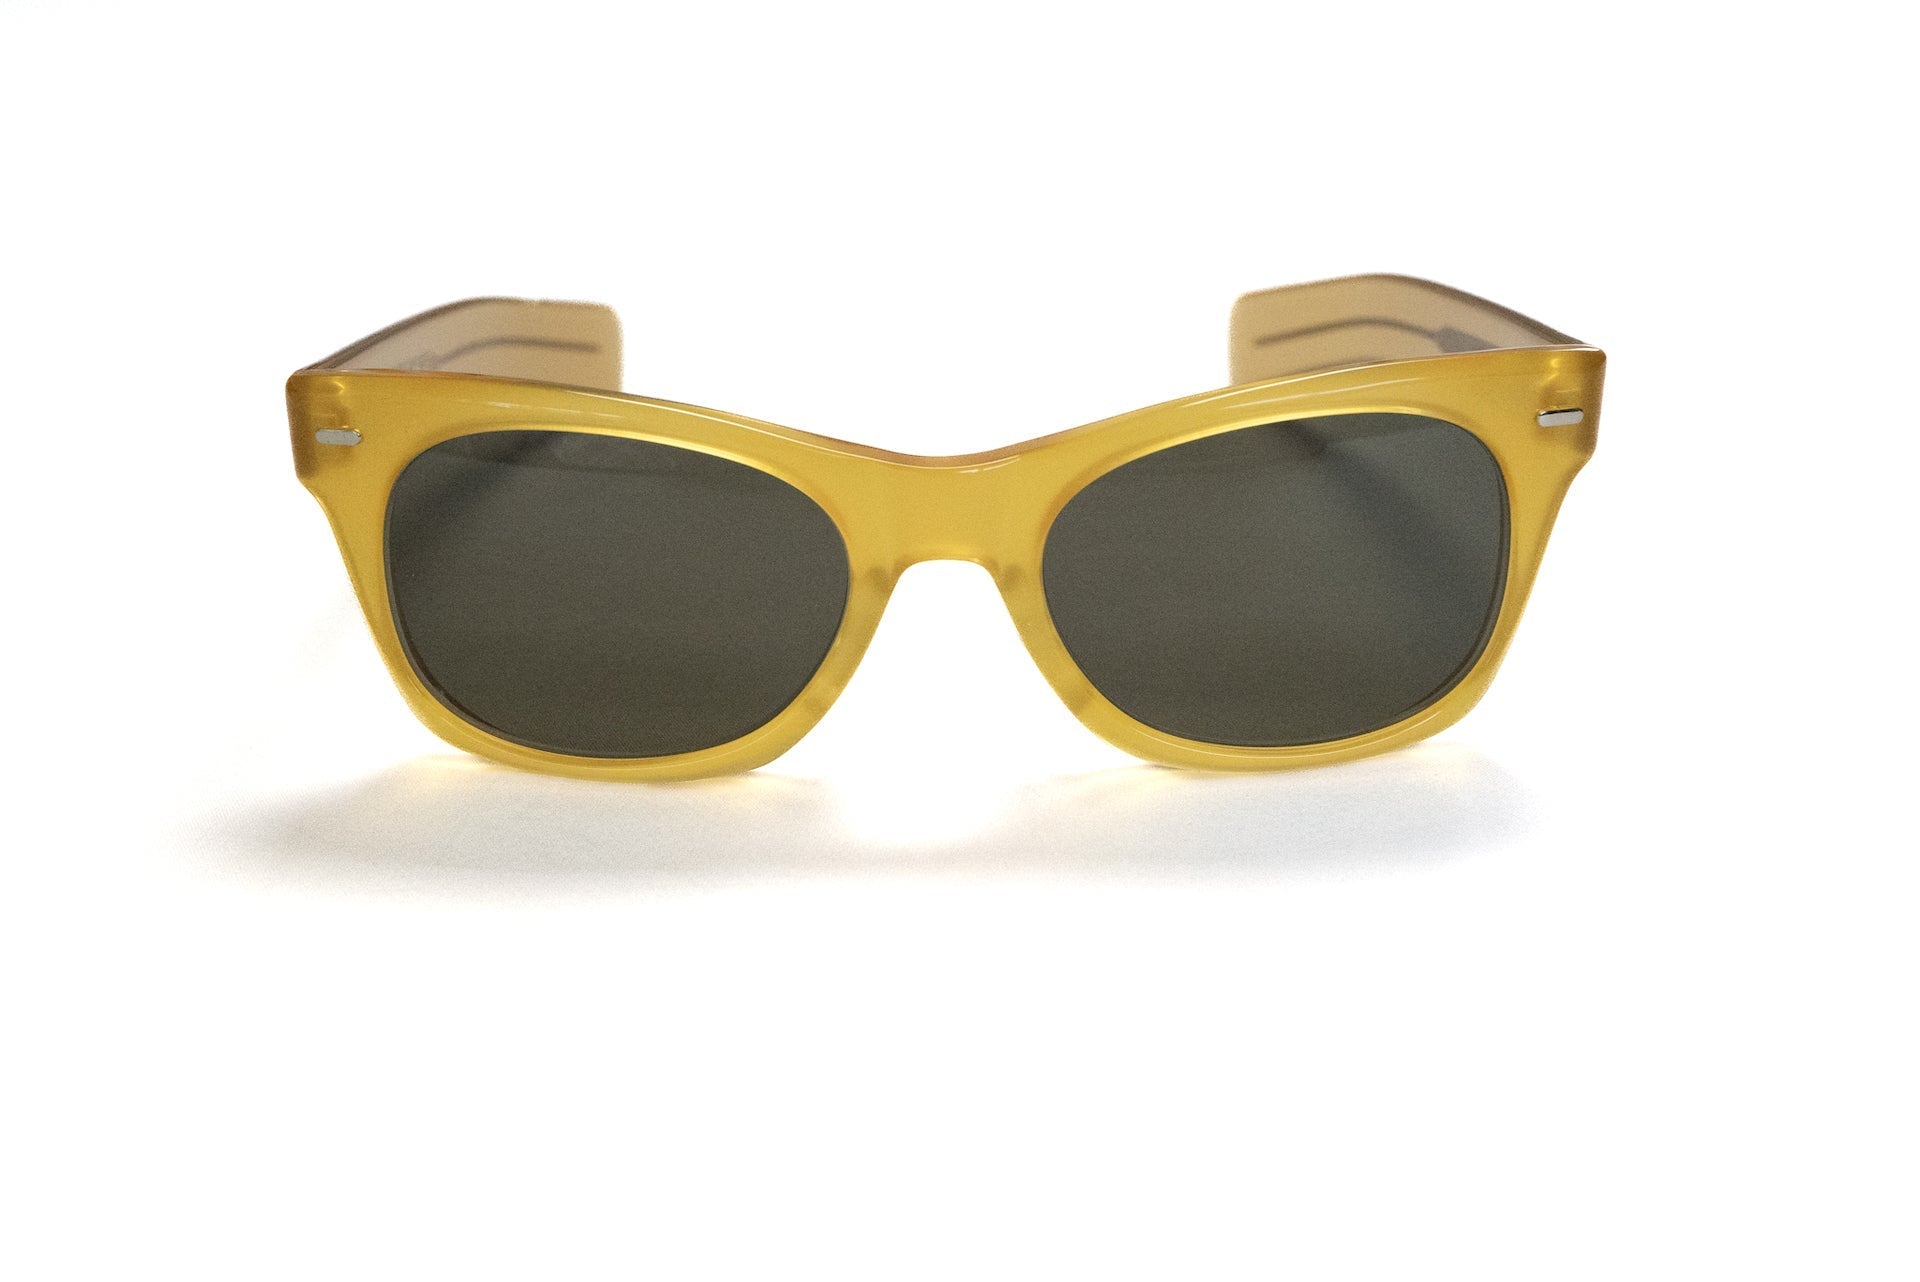 The Flat Head "Mid-Century" Acetate Sunglasses (Honey Yellow)